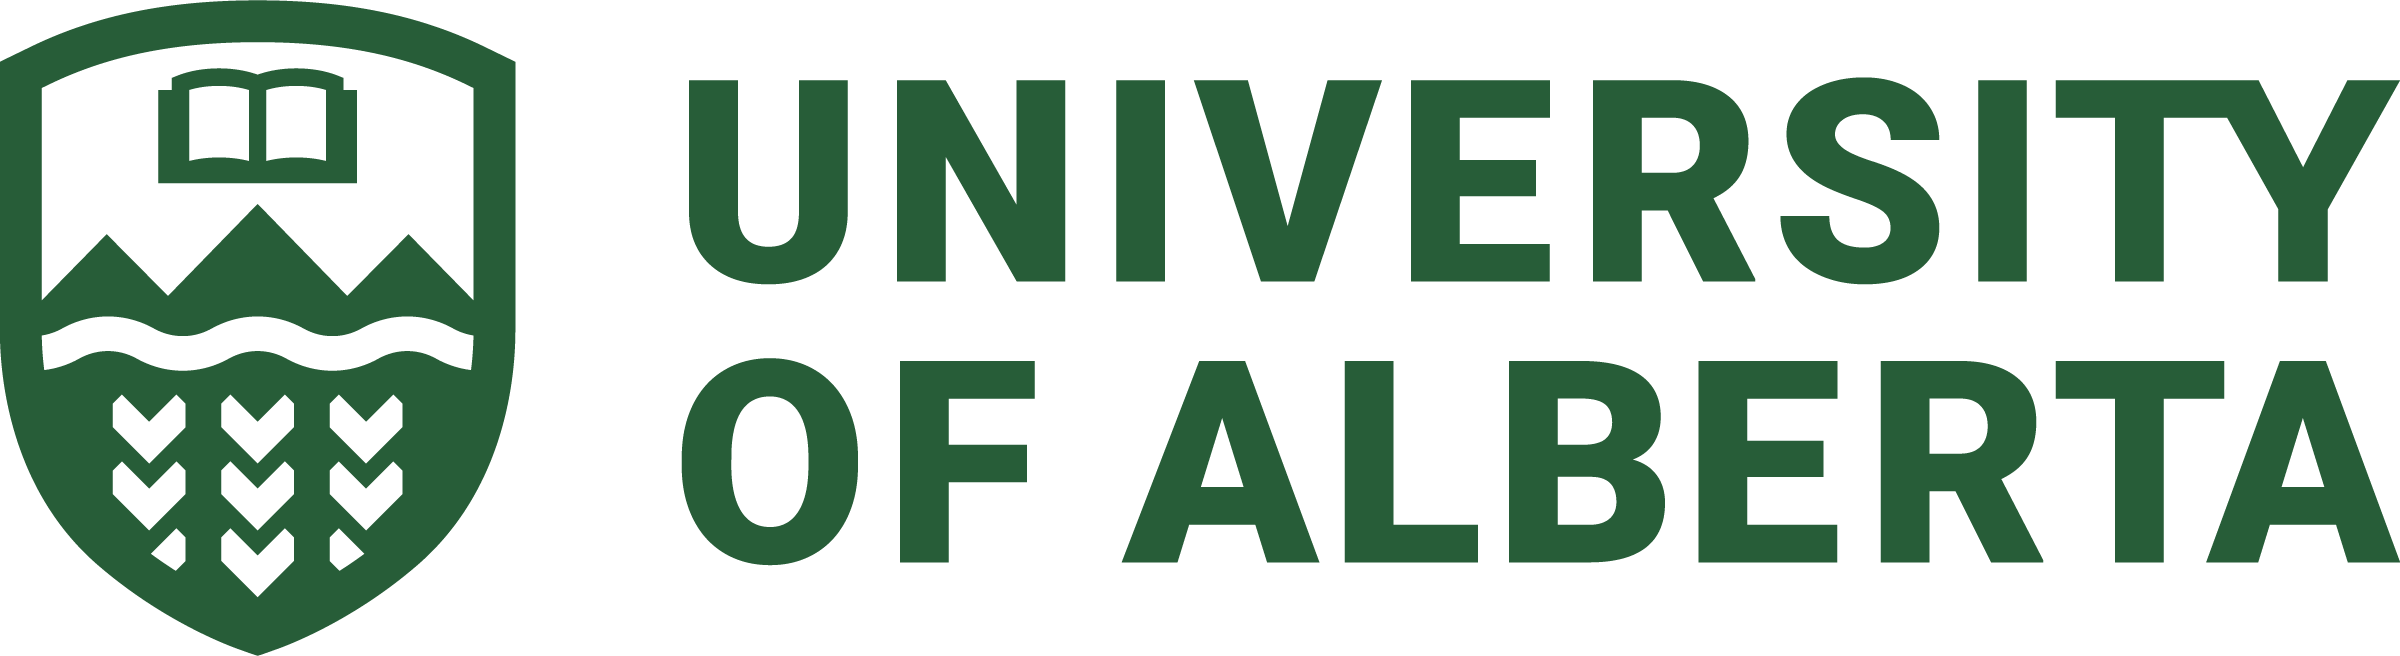 University of Alberta Logo Green